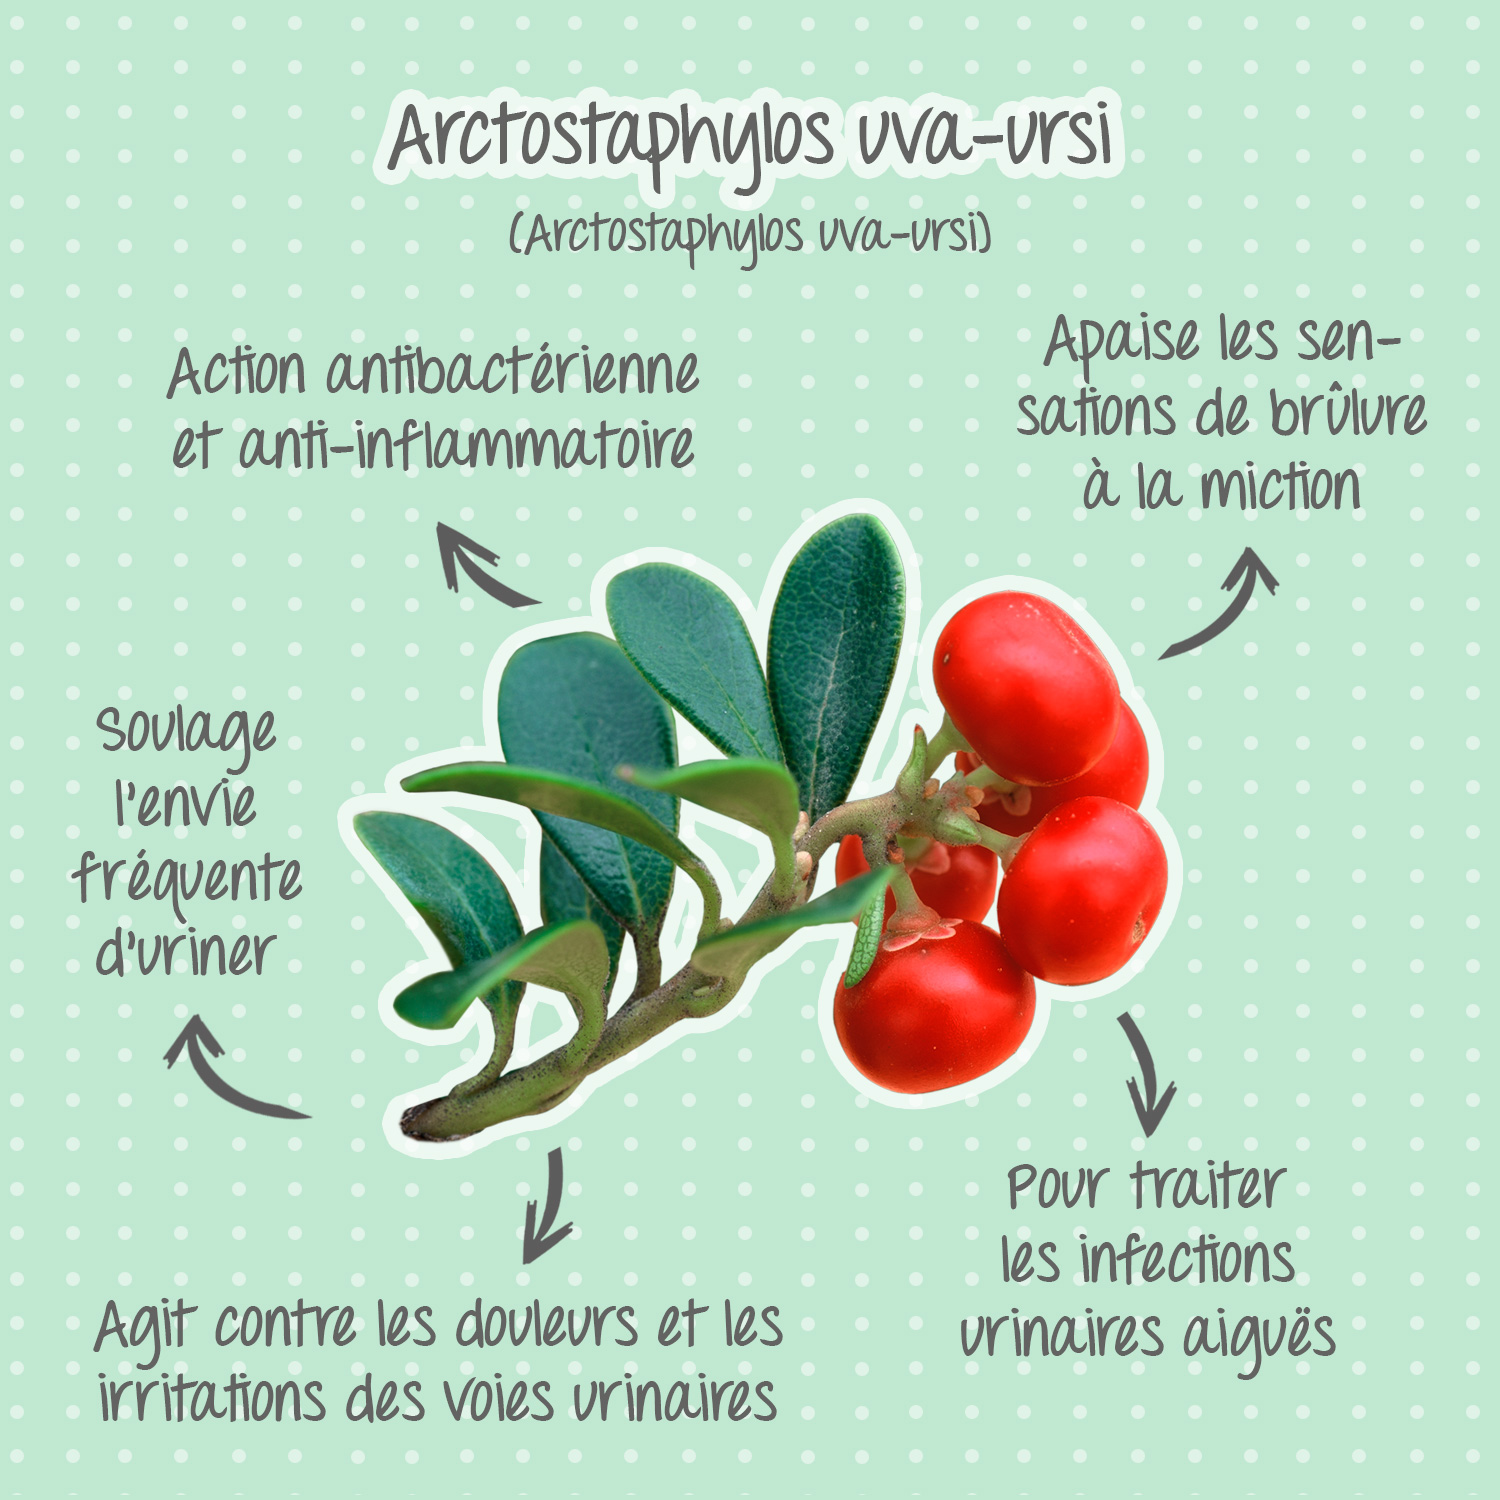 Arctostaphylos uva-ursi, le raisin d'ours commun